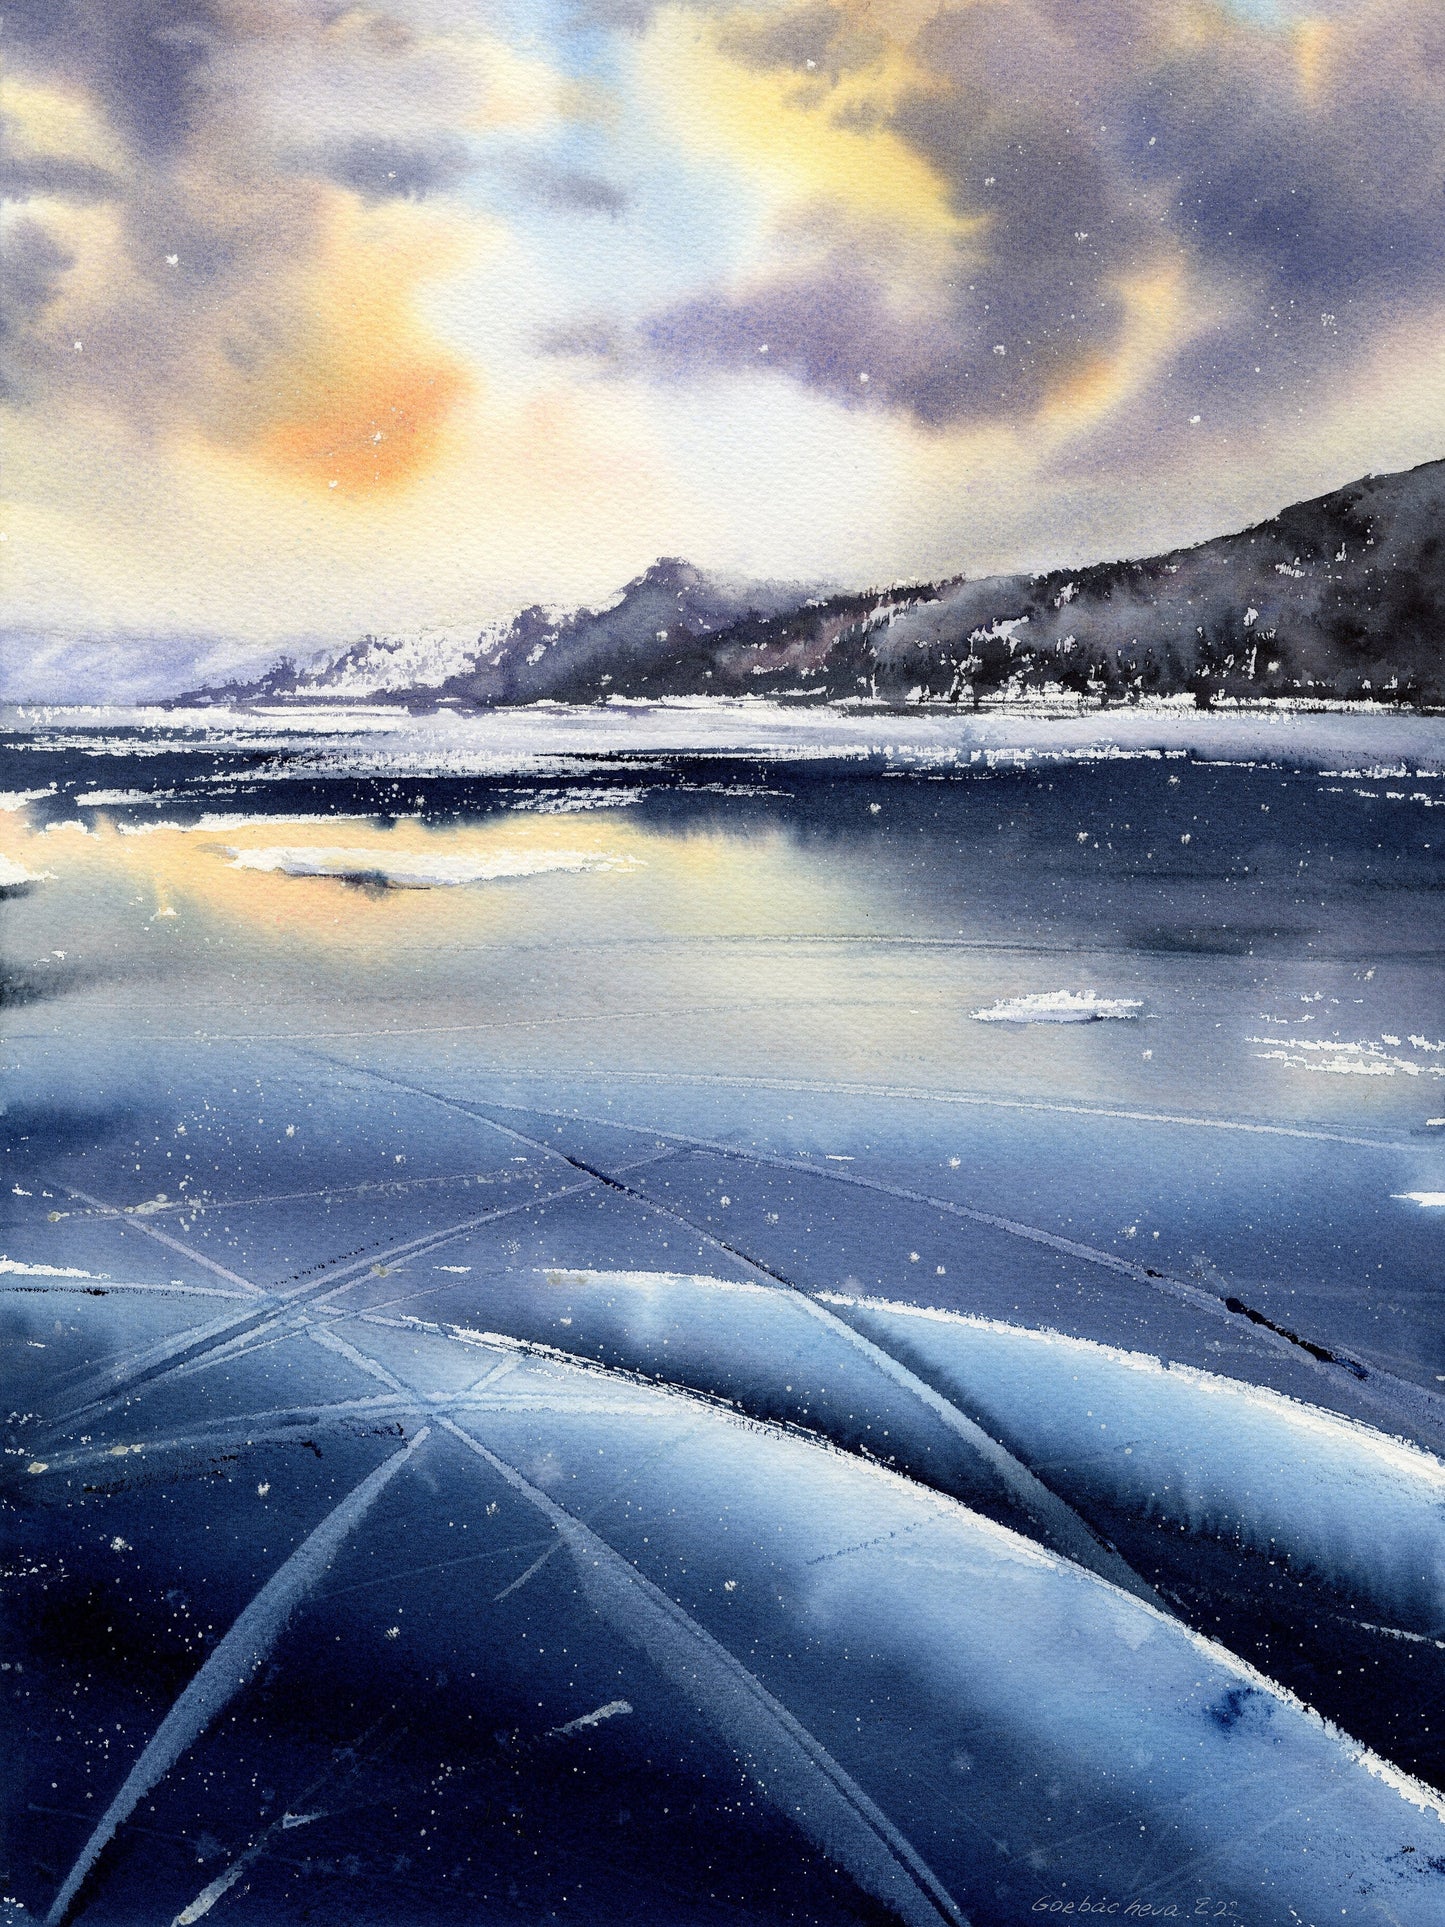 Frozen Lake Art Print, Winter Nature Wall Art, Watercolor Baikal Painting, Landscape Canvas Prints, Blue Ice, Home Decor